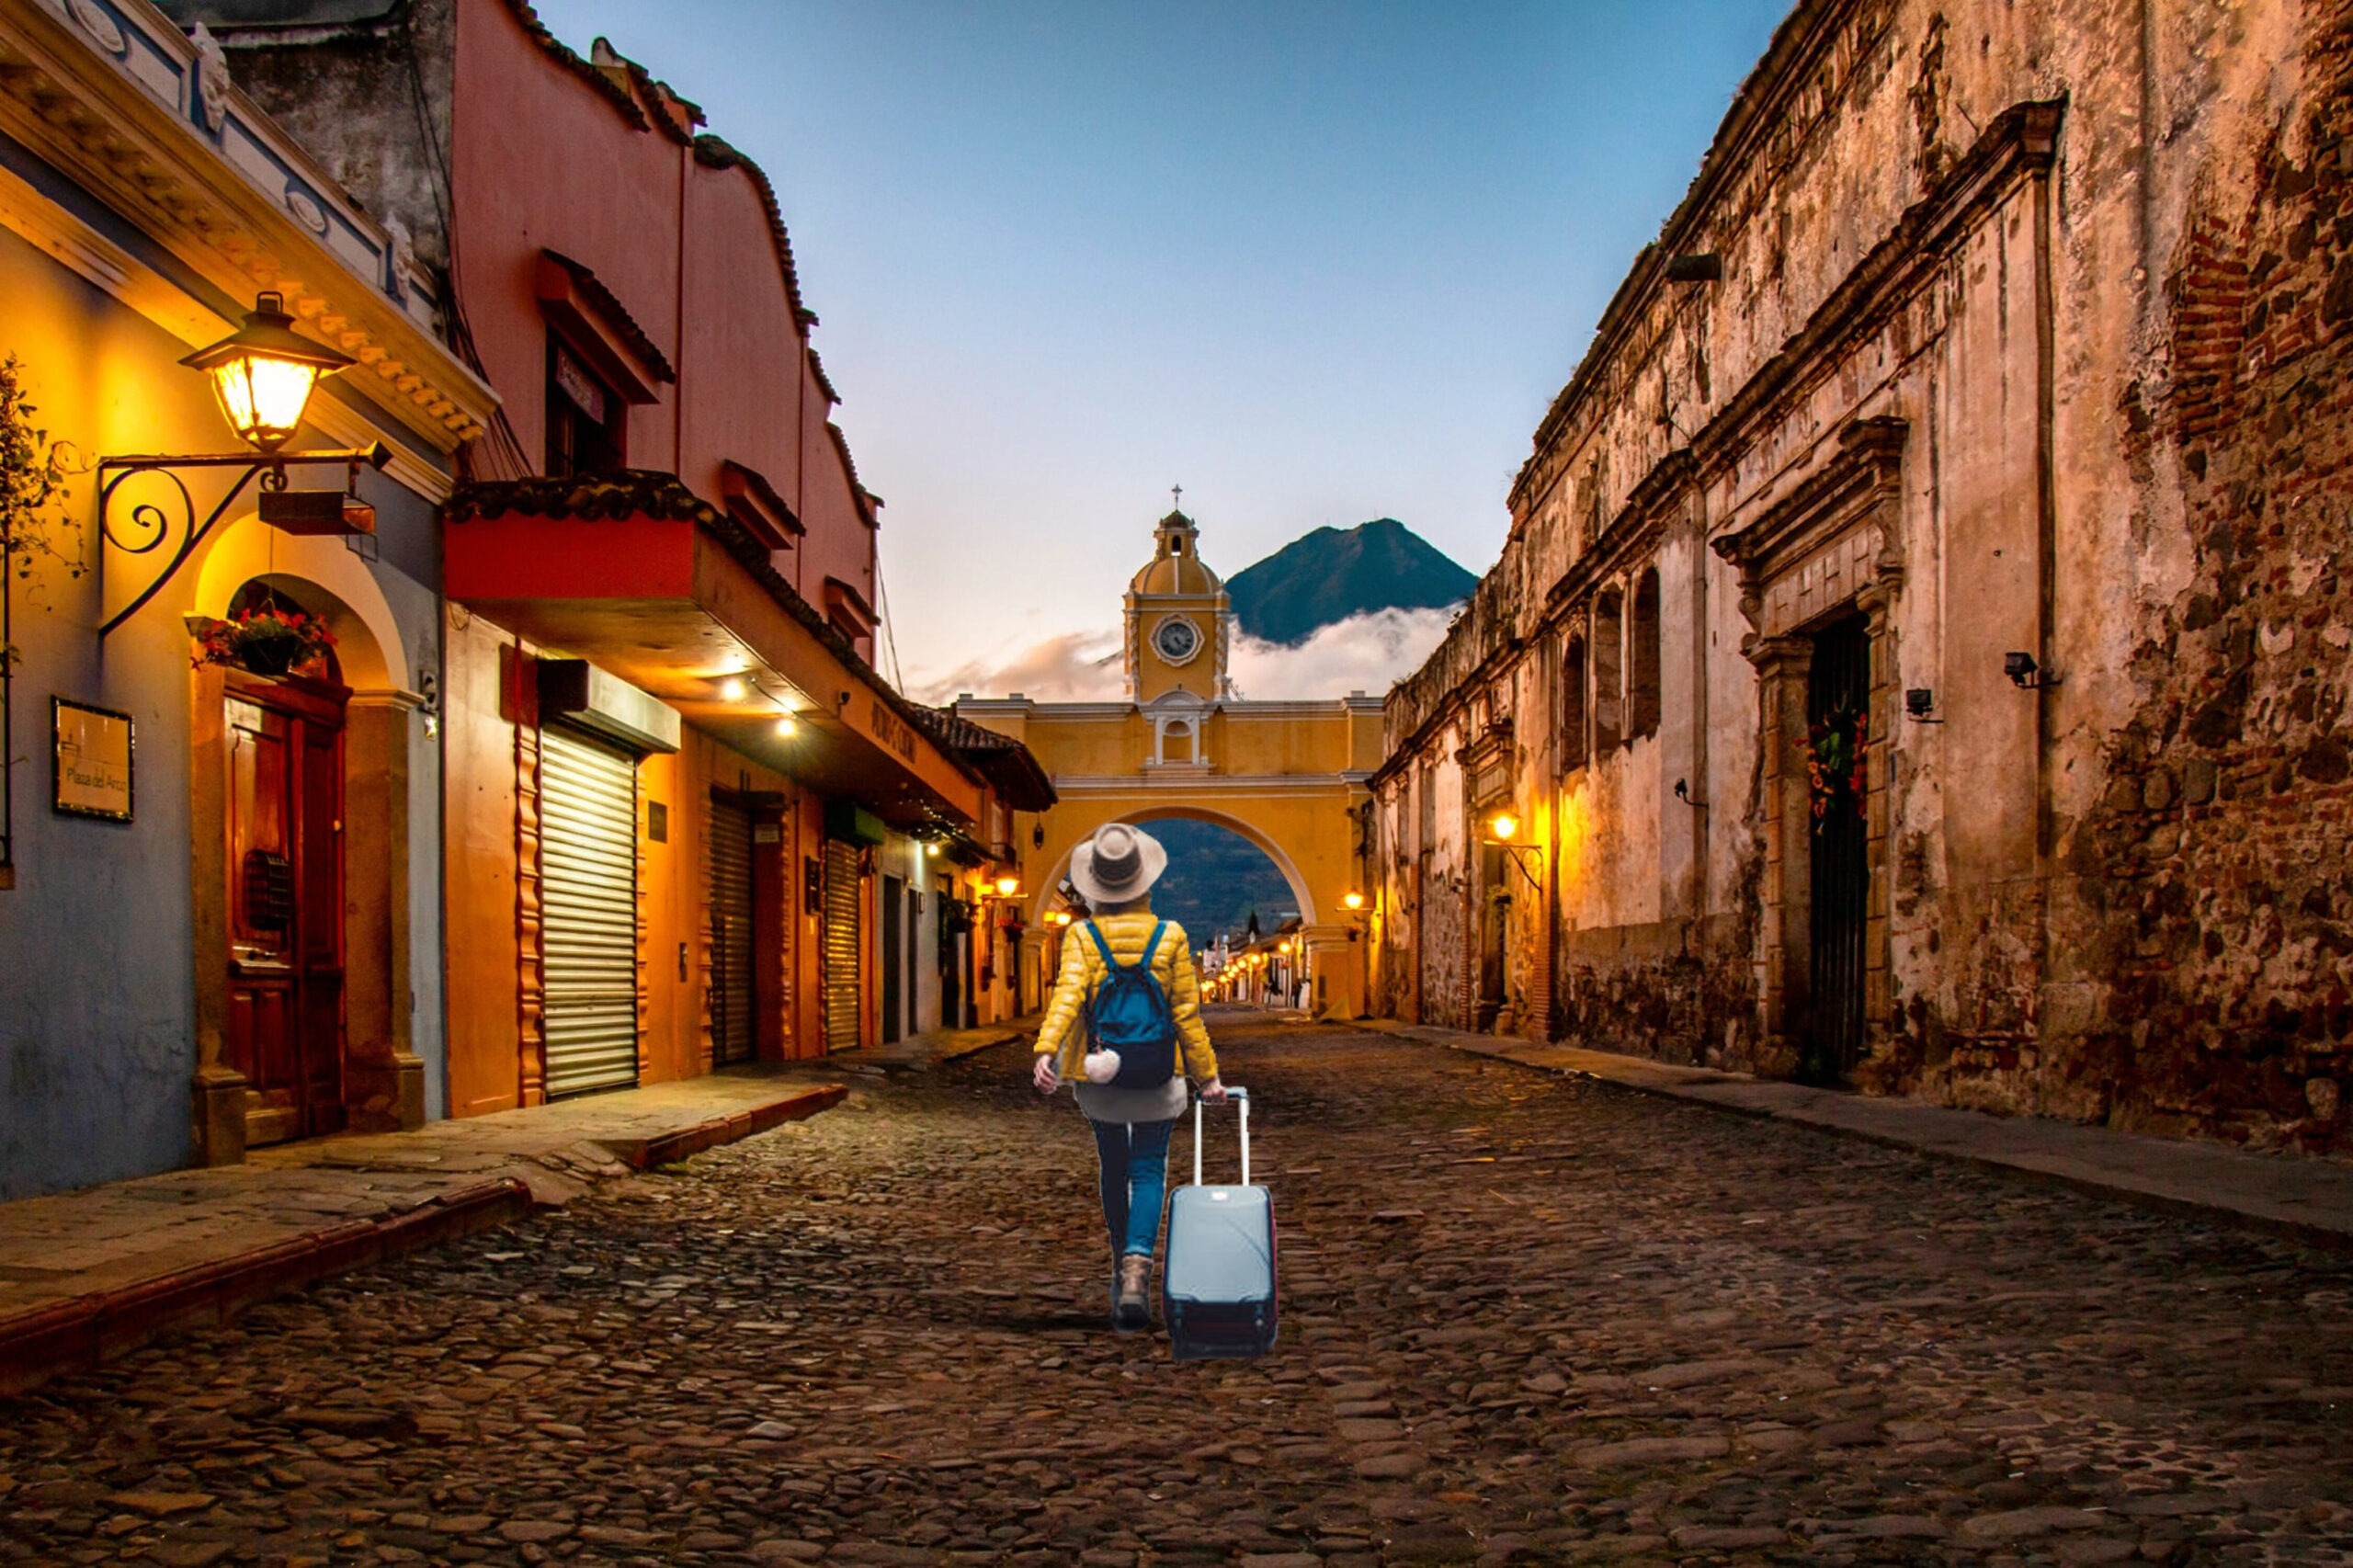 Solo Women Guatemala Travel